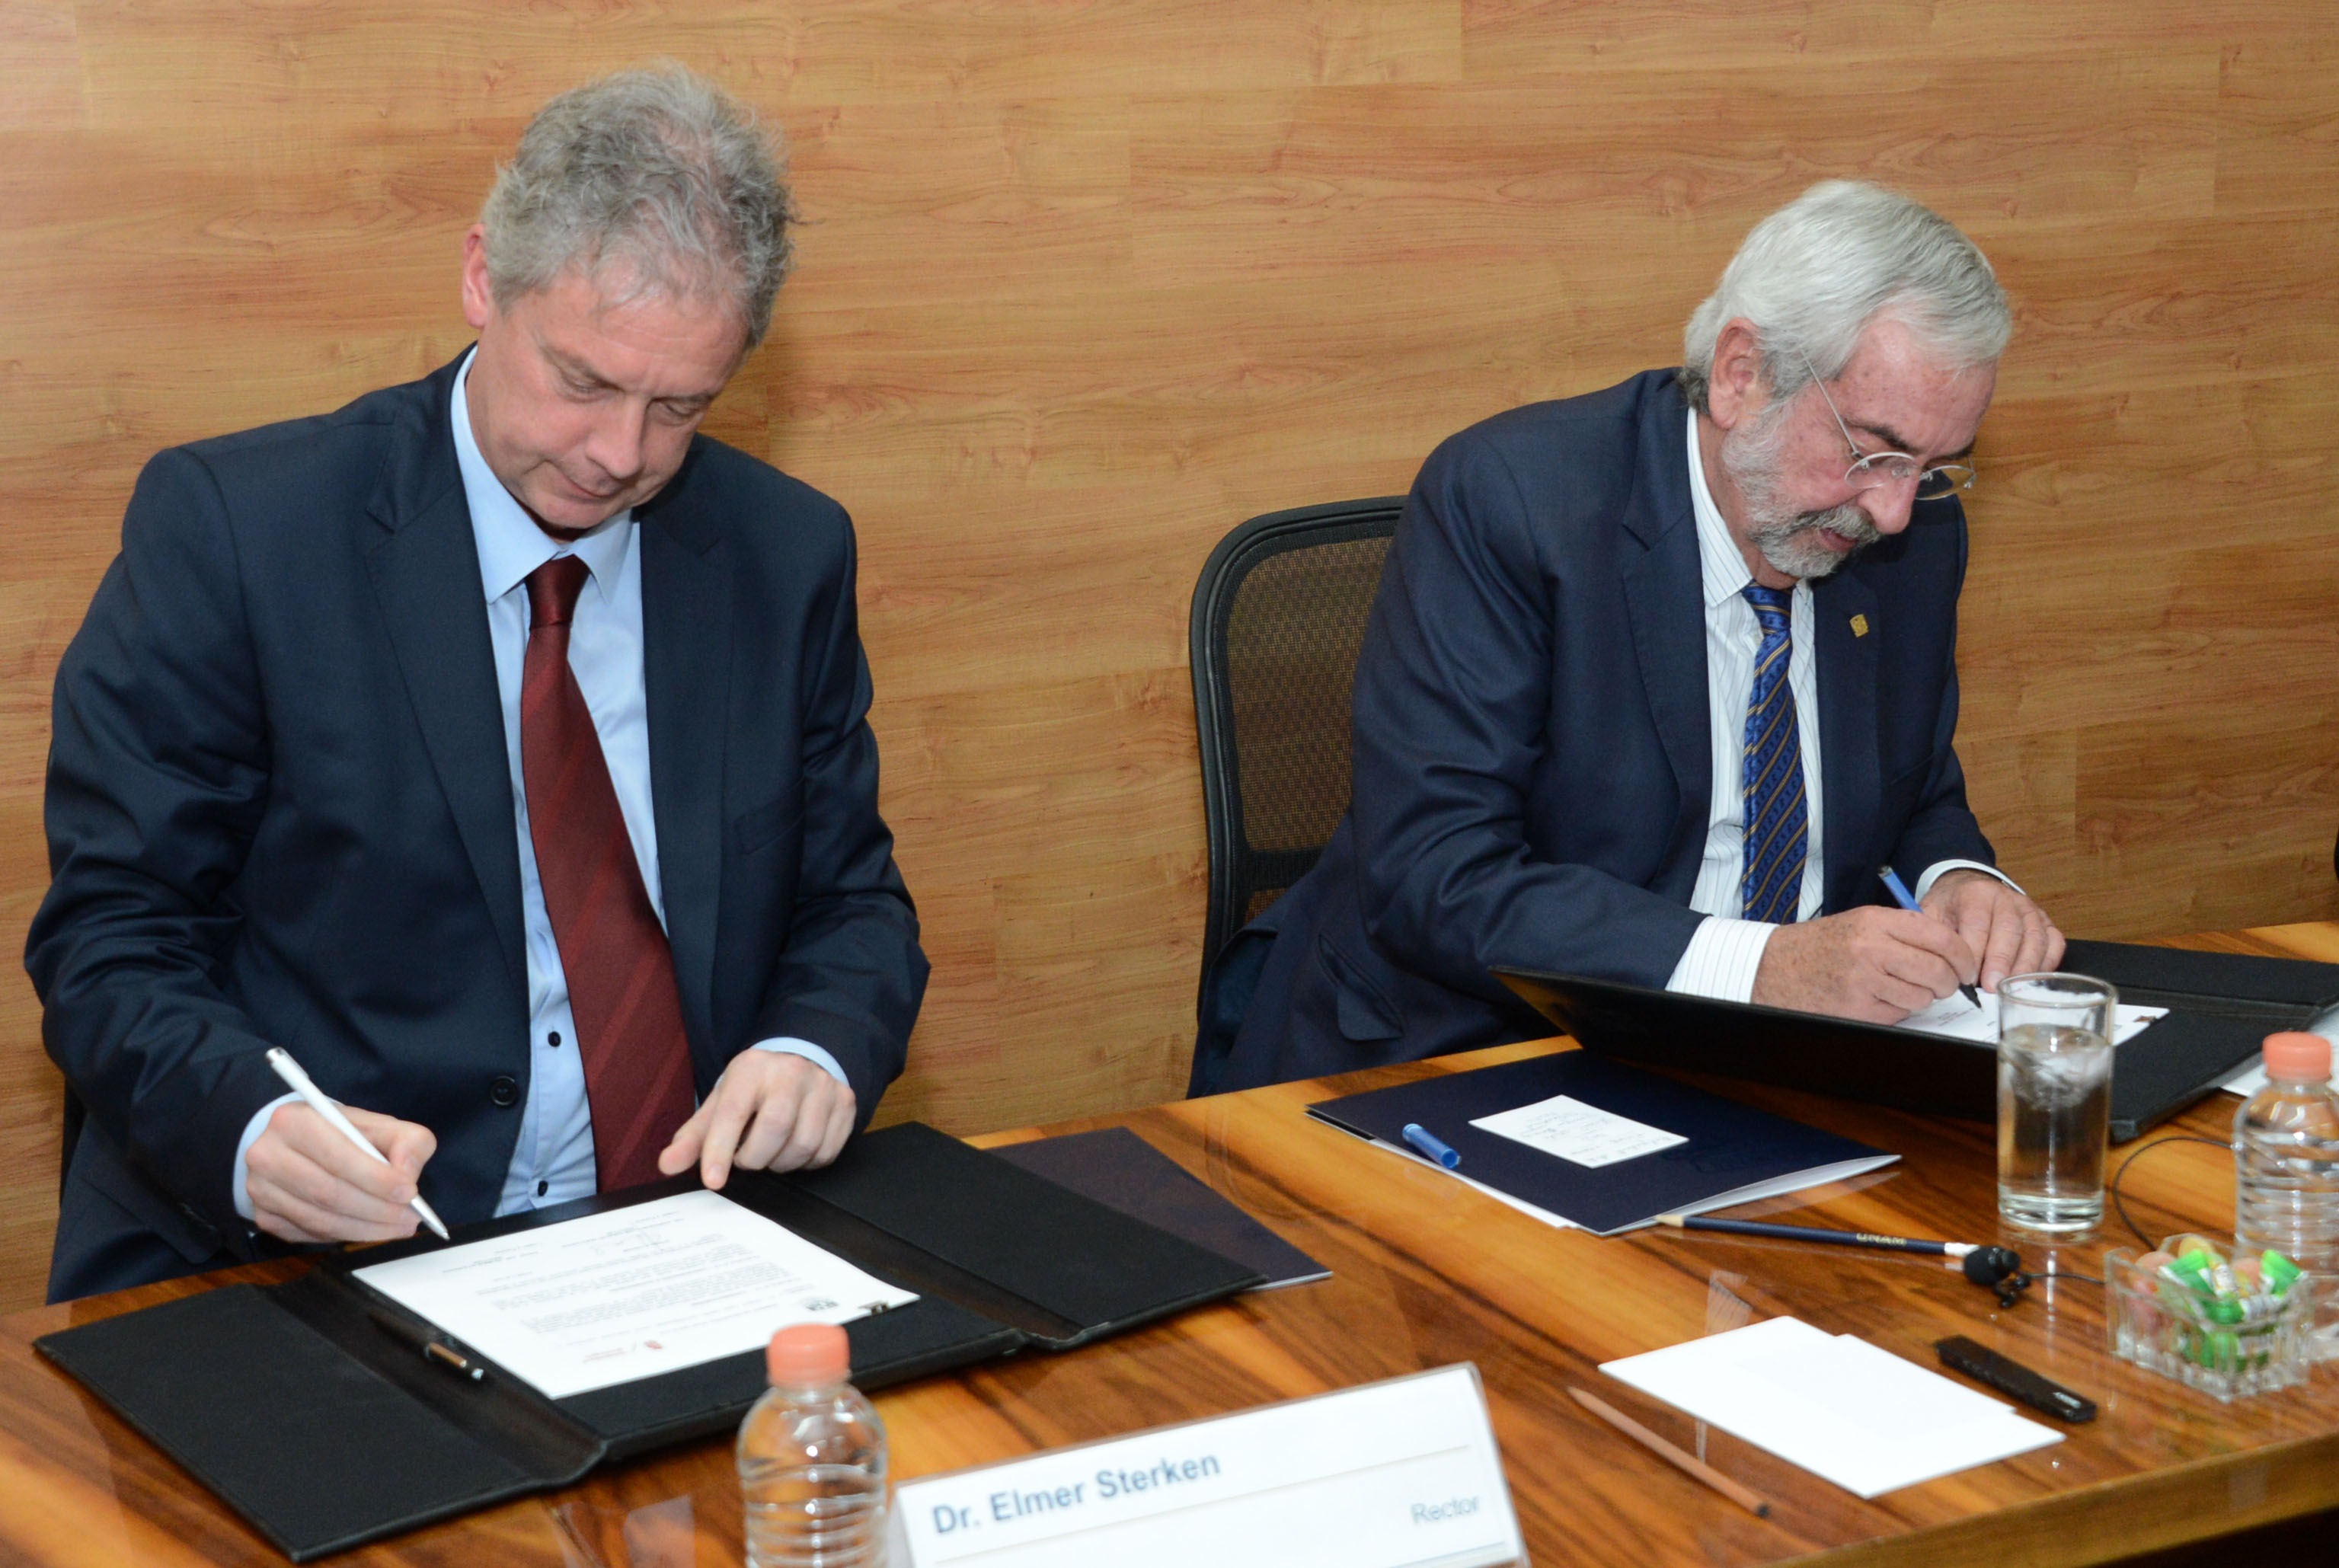 Rector Elmer Sterken of UG and rector Enrique Graue of UNAM sign the agreement. Copyright Universidad Nacional Autónoma de México